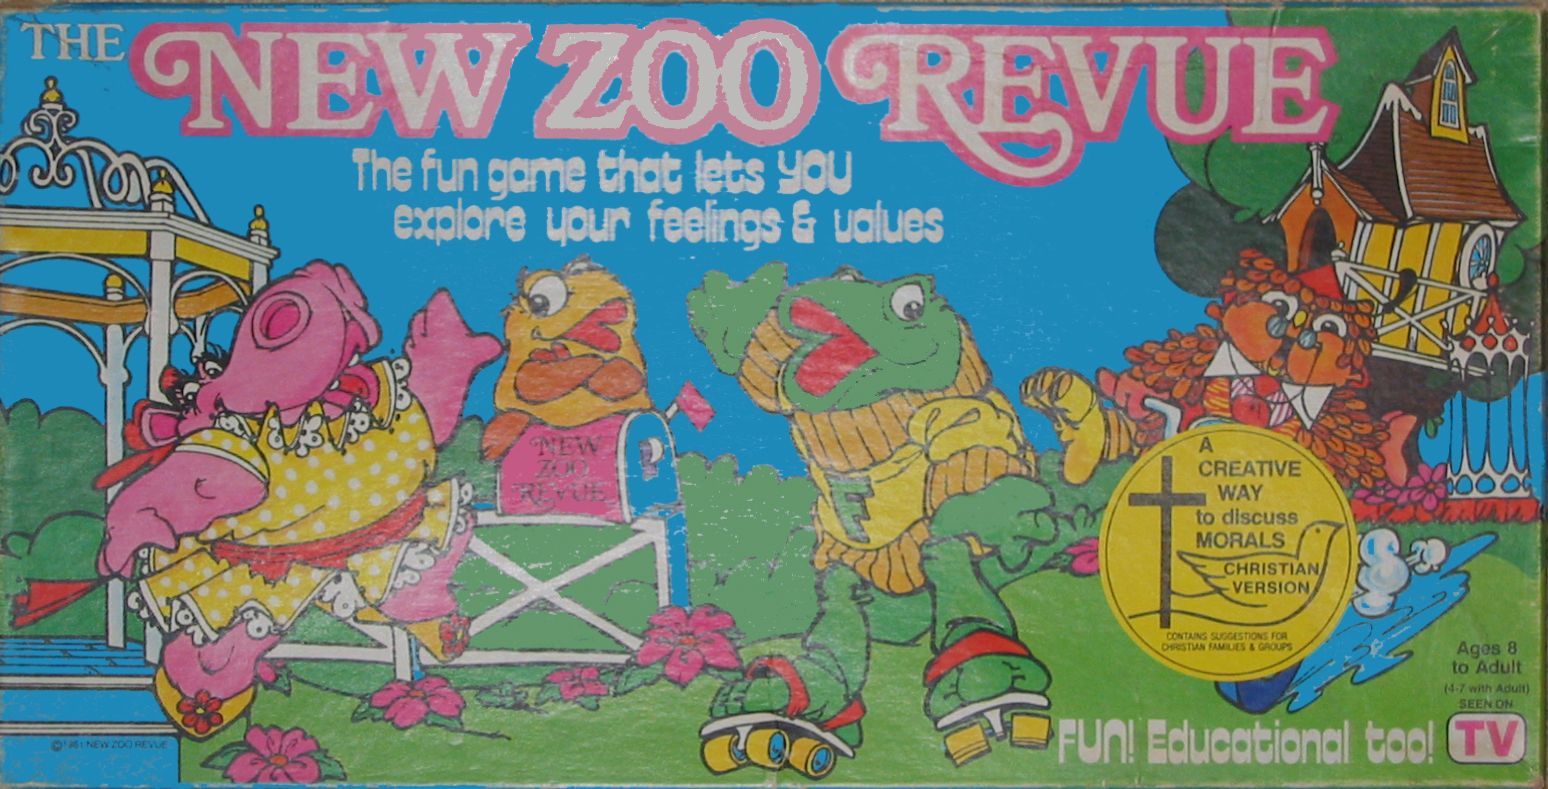 The New Zoo Revue